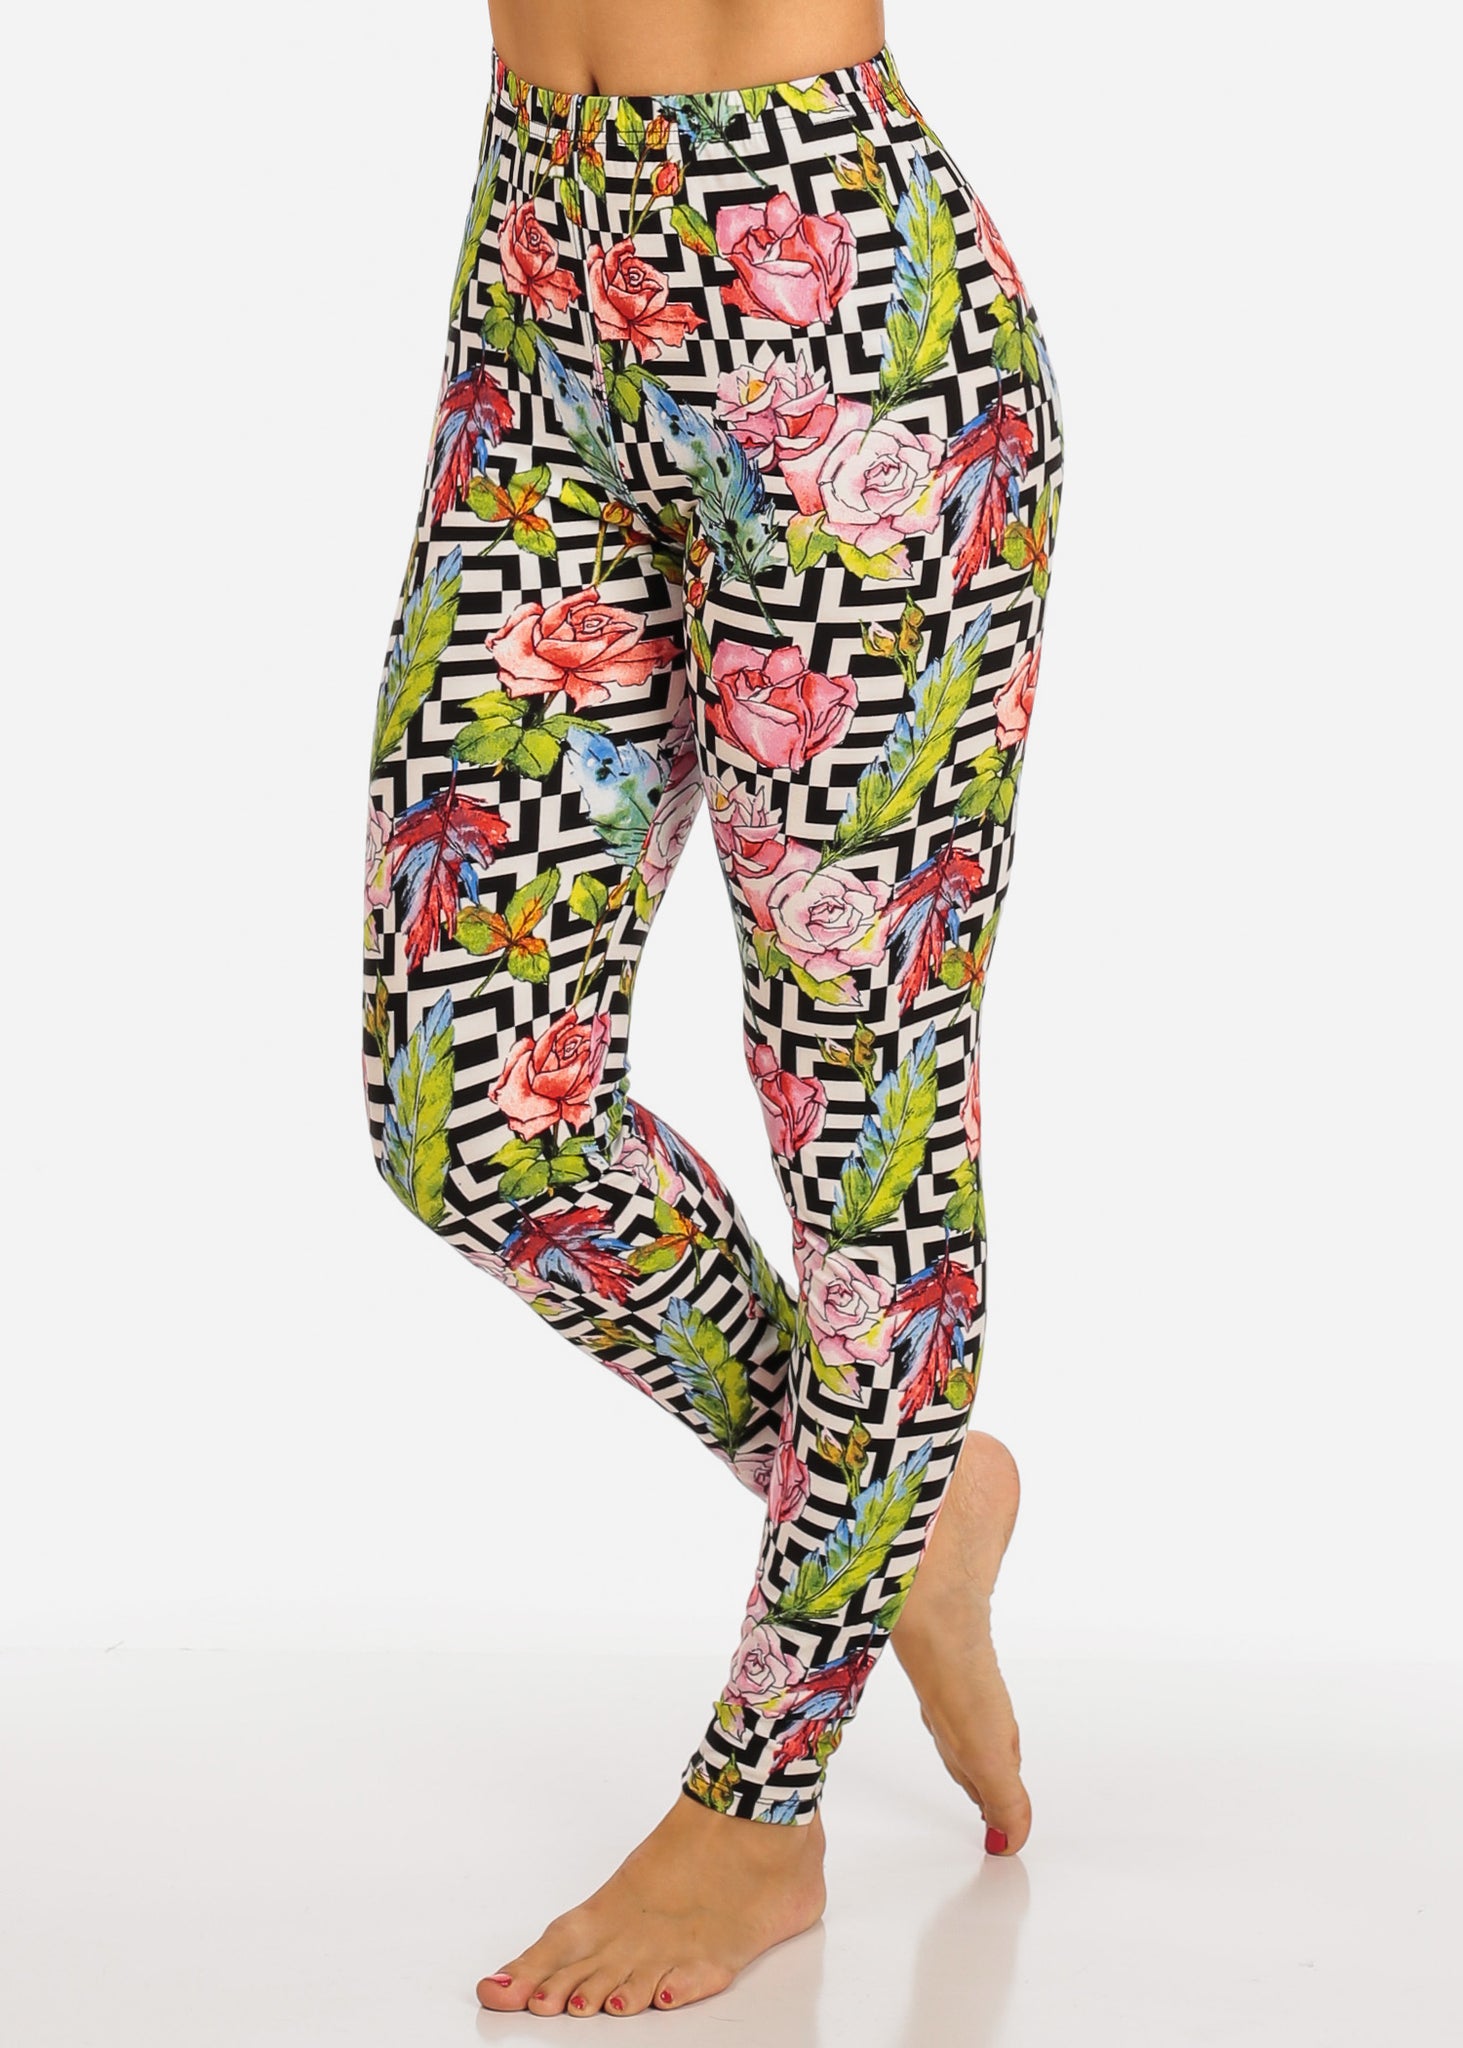 SOFT SURROUNDINGS Multi-Colored Mosaic Print Leggings - Women's Petite  Medium